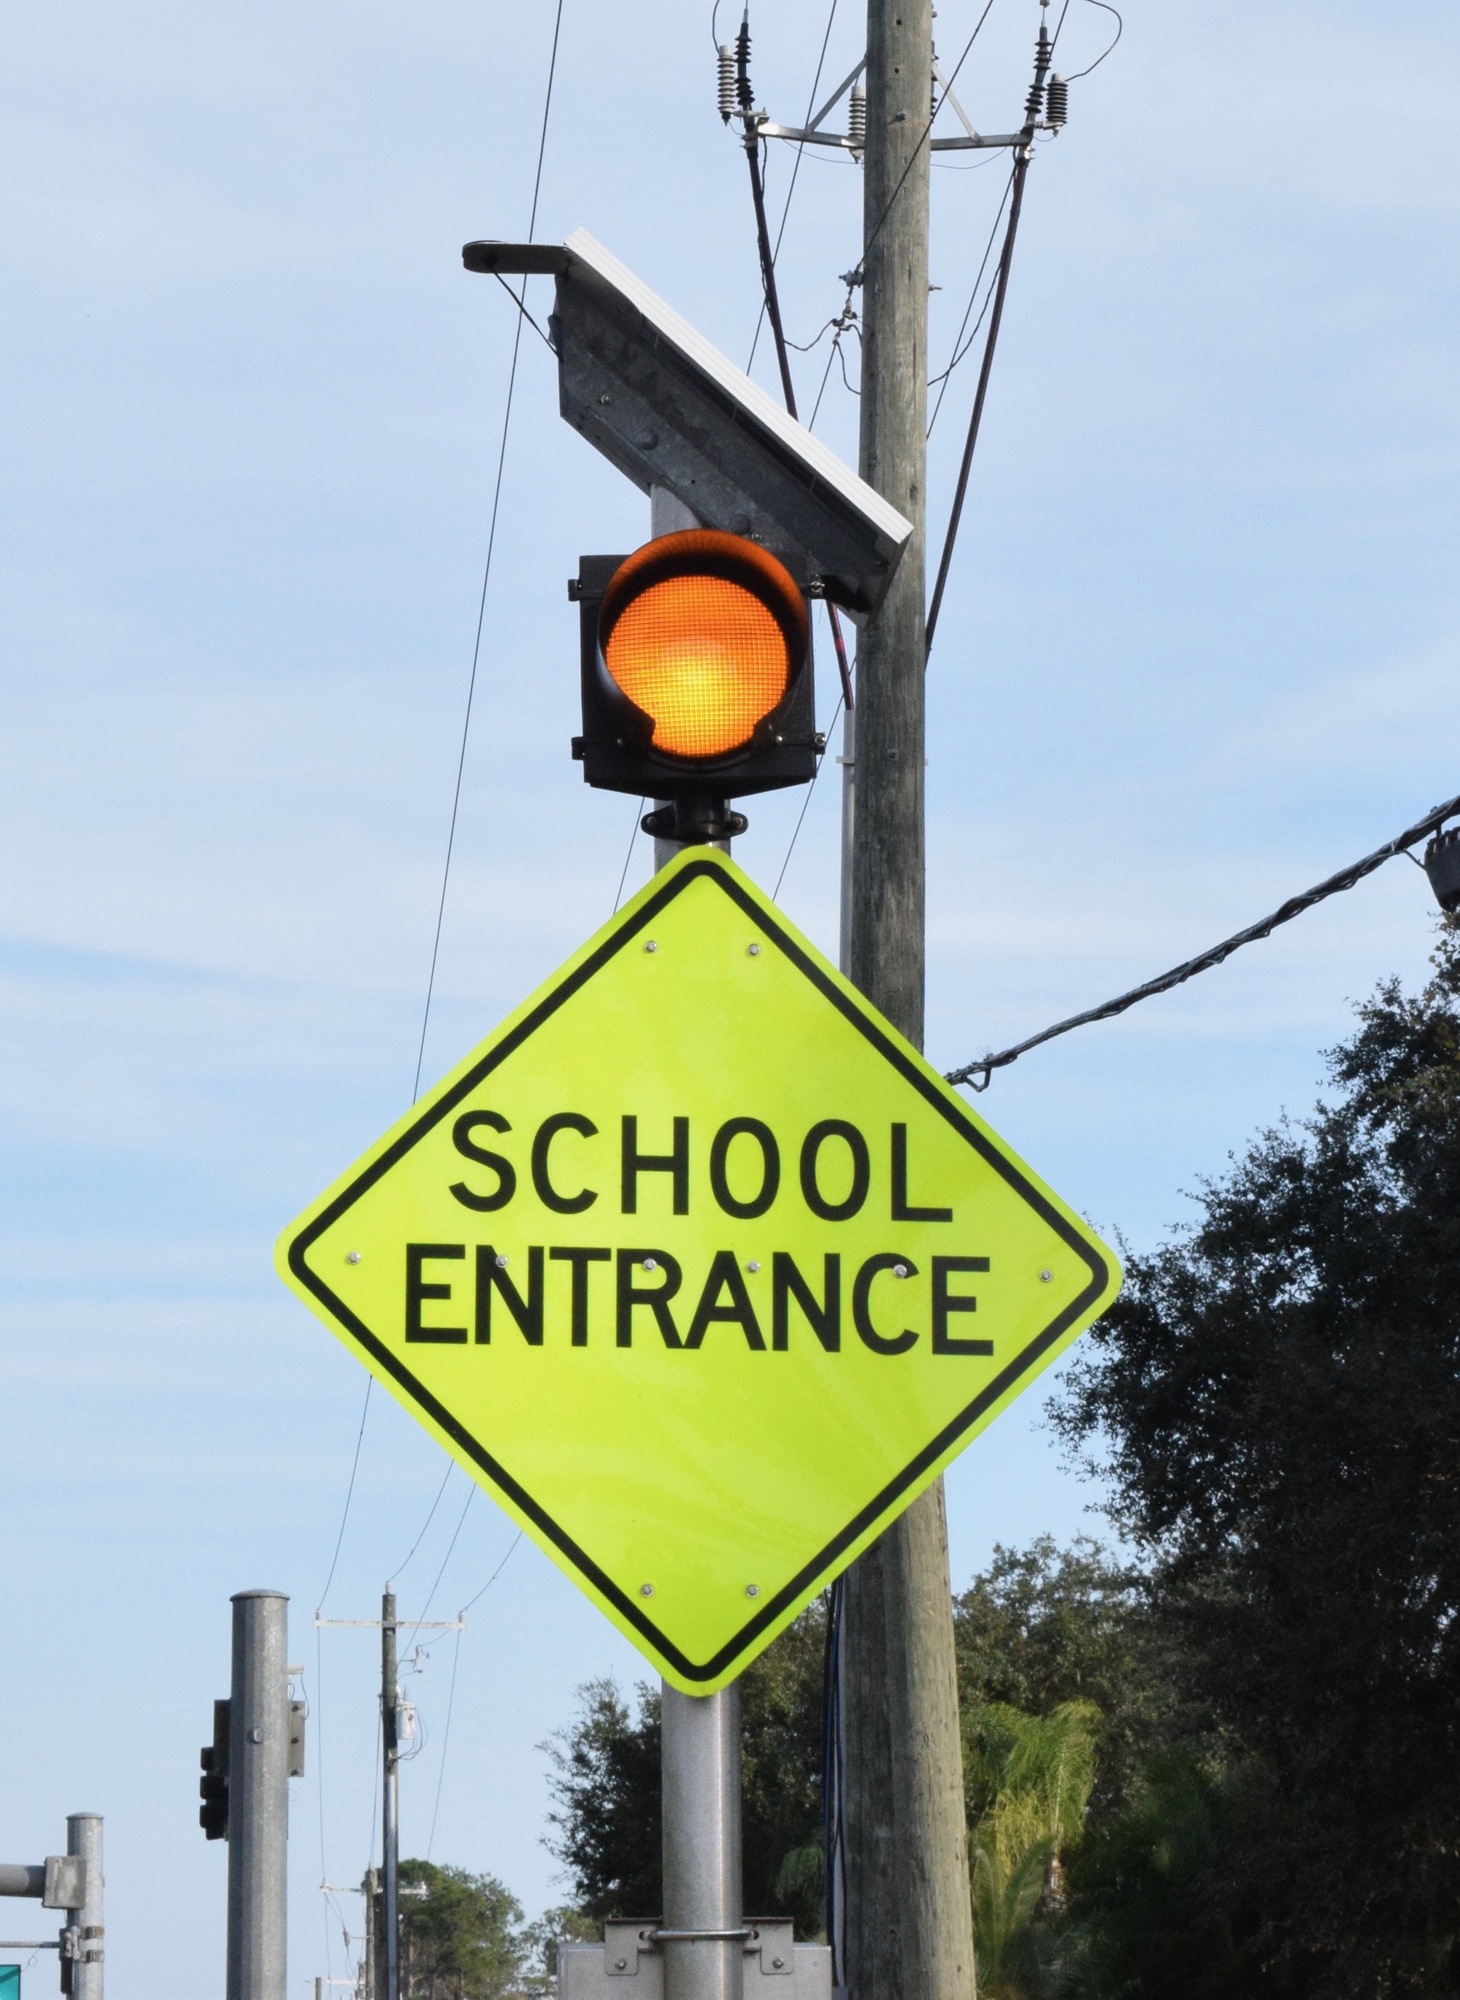 School entrance sign.